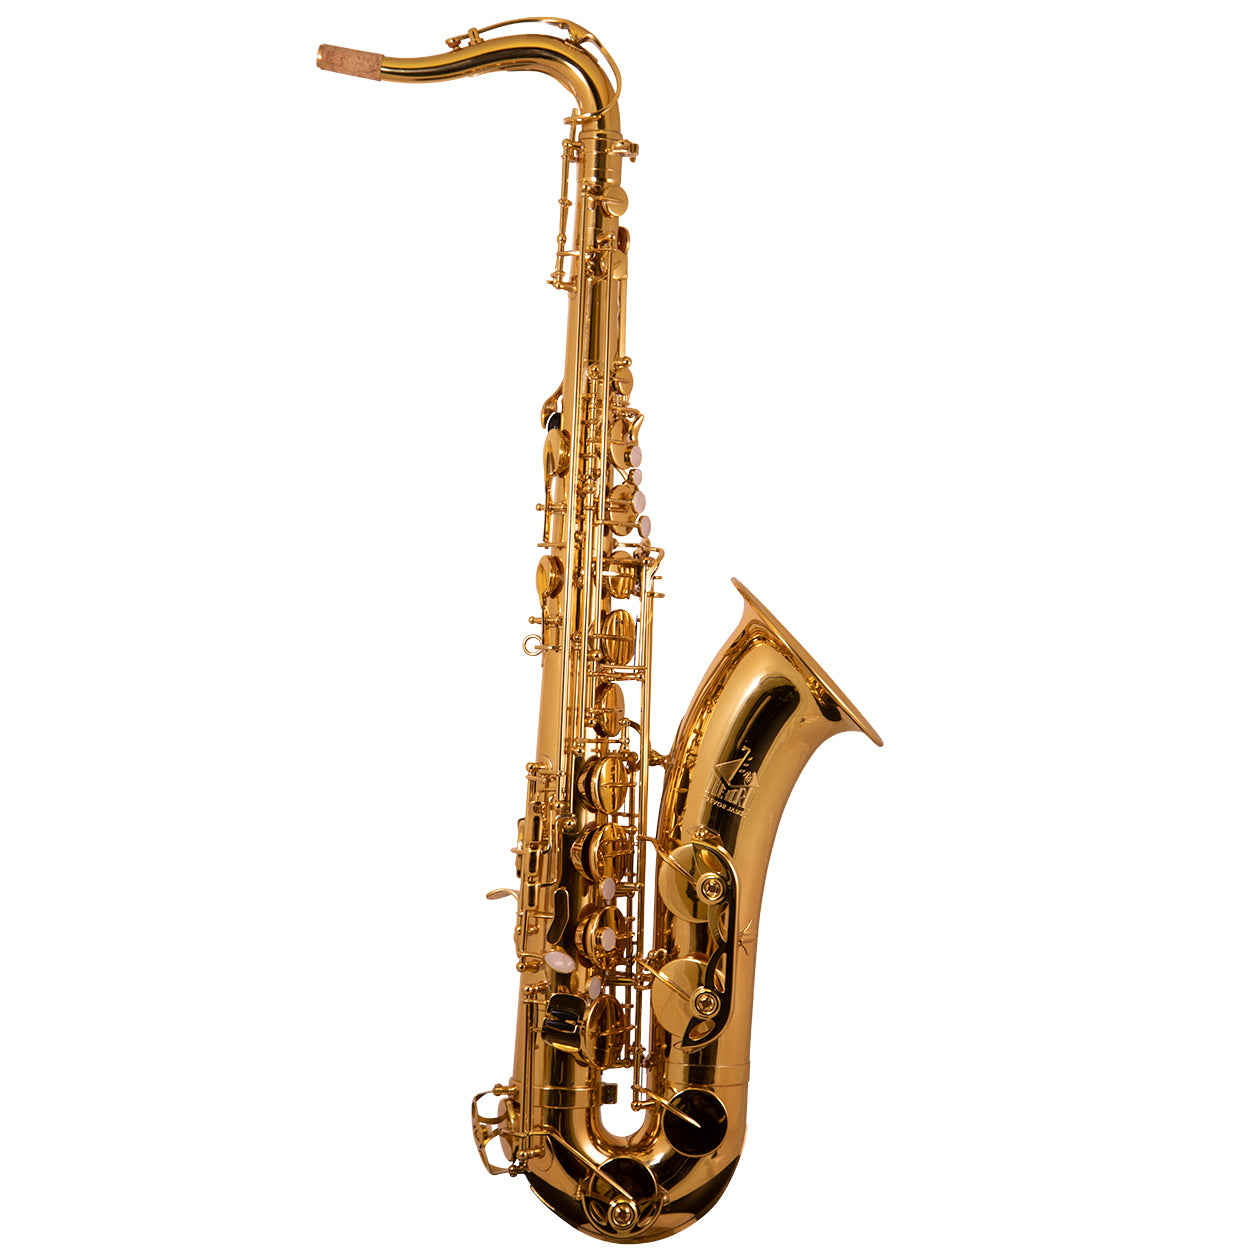 Trevor James Tenor Saxophone - Classic 'The Horn'